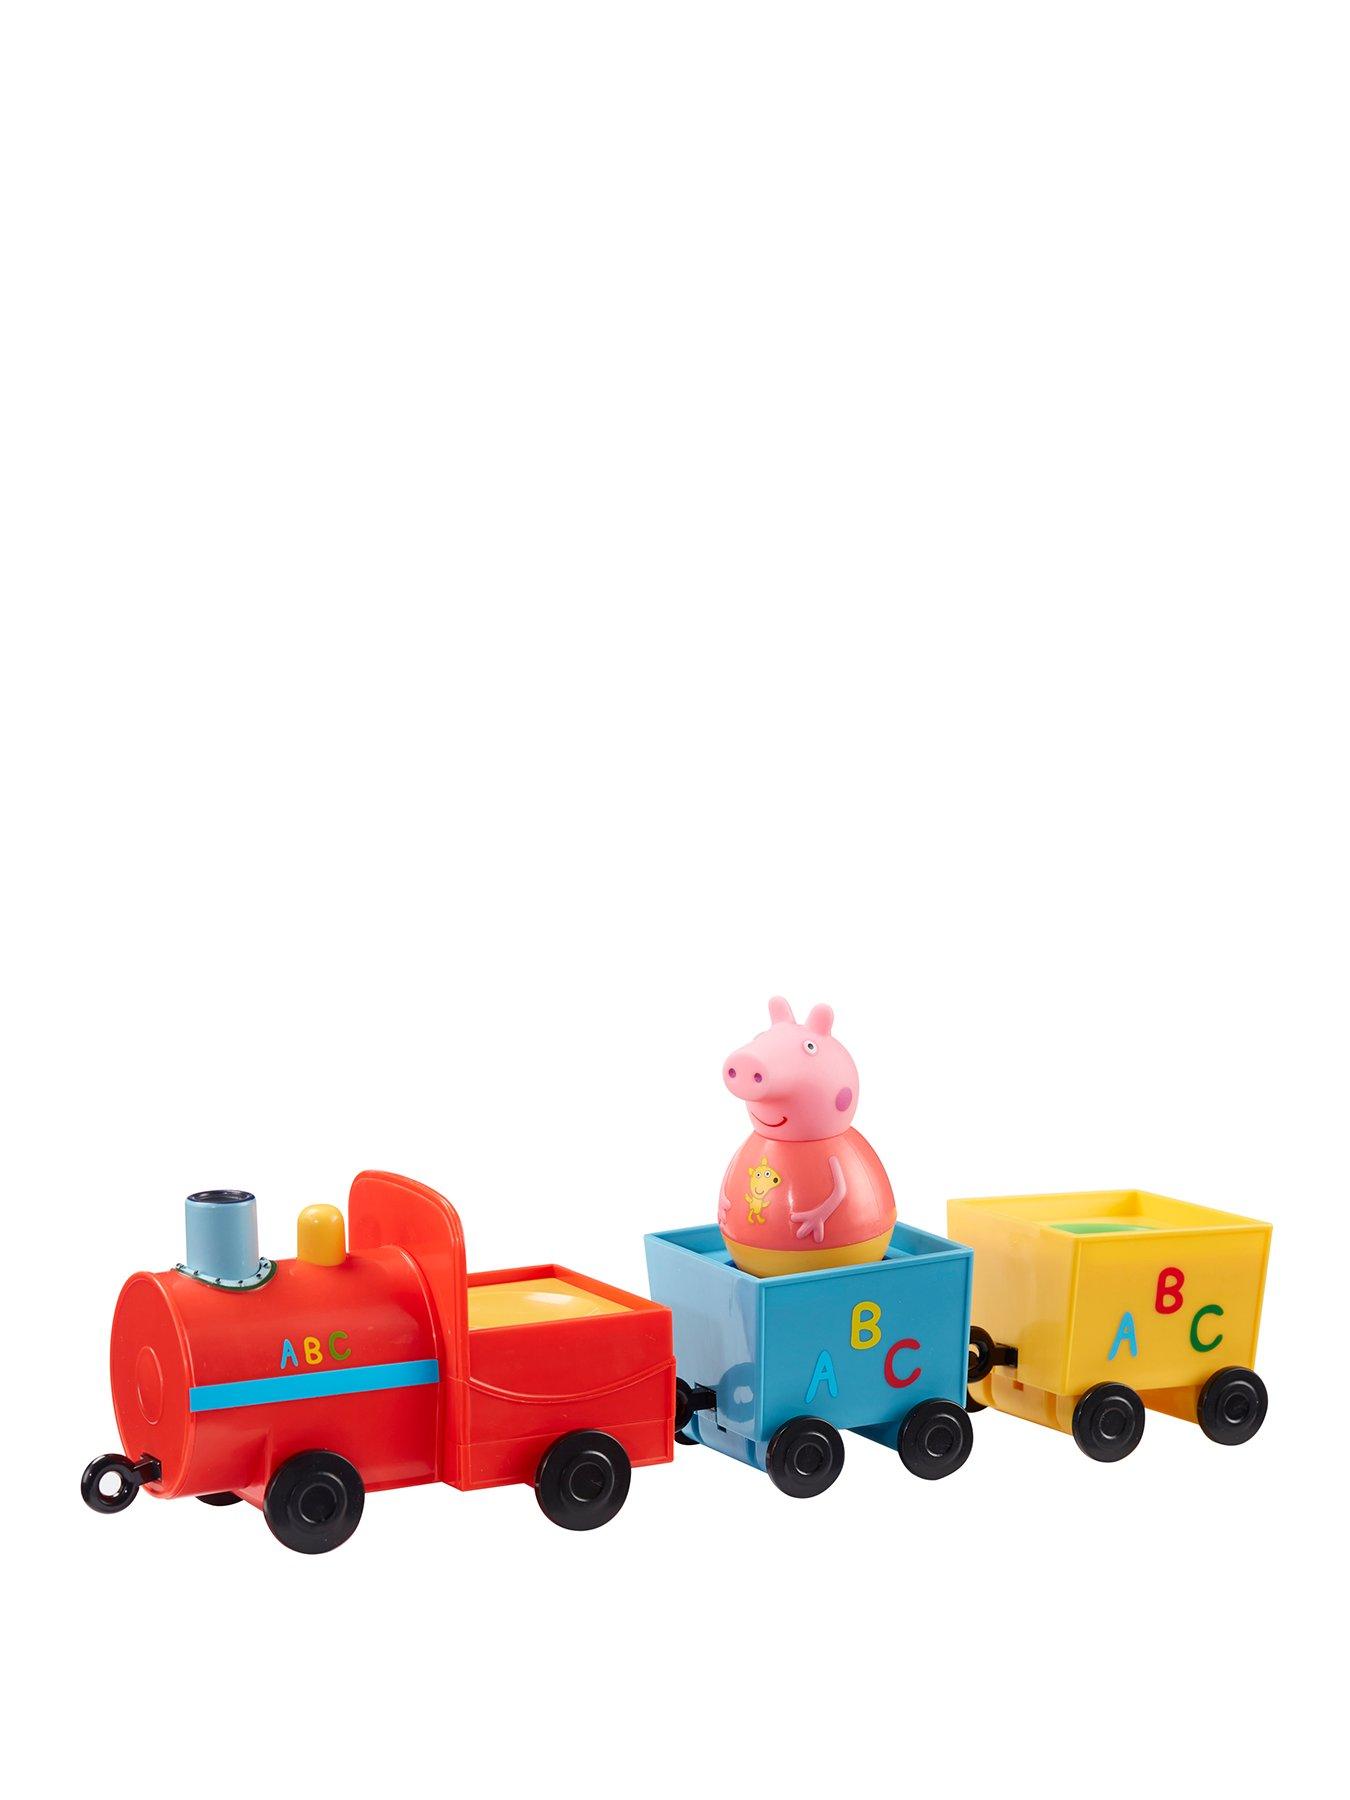 Details about   Original Peppa Pig Assembling Building Blocks Train Children's Toys George Pig 